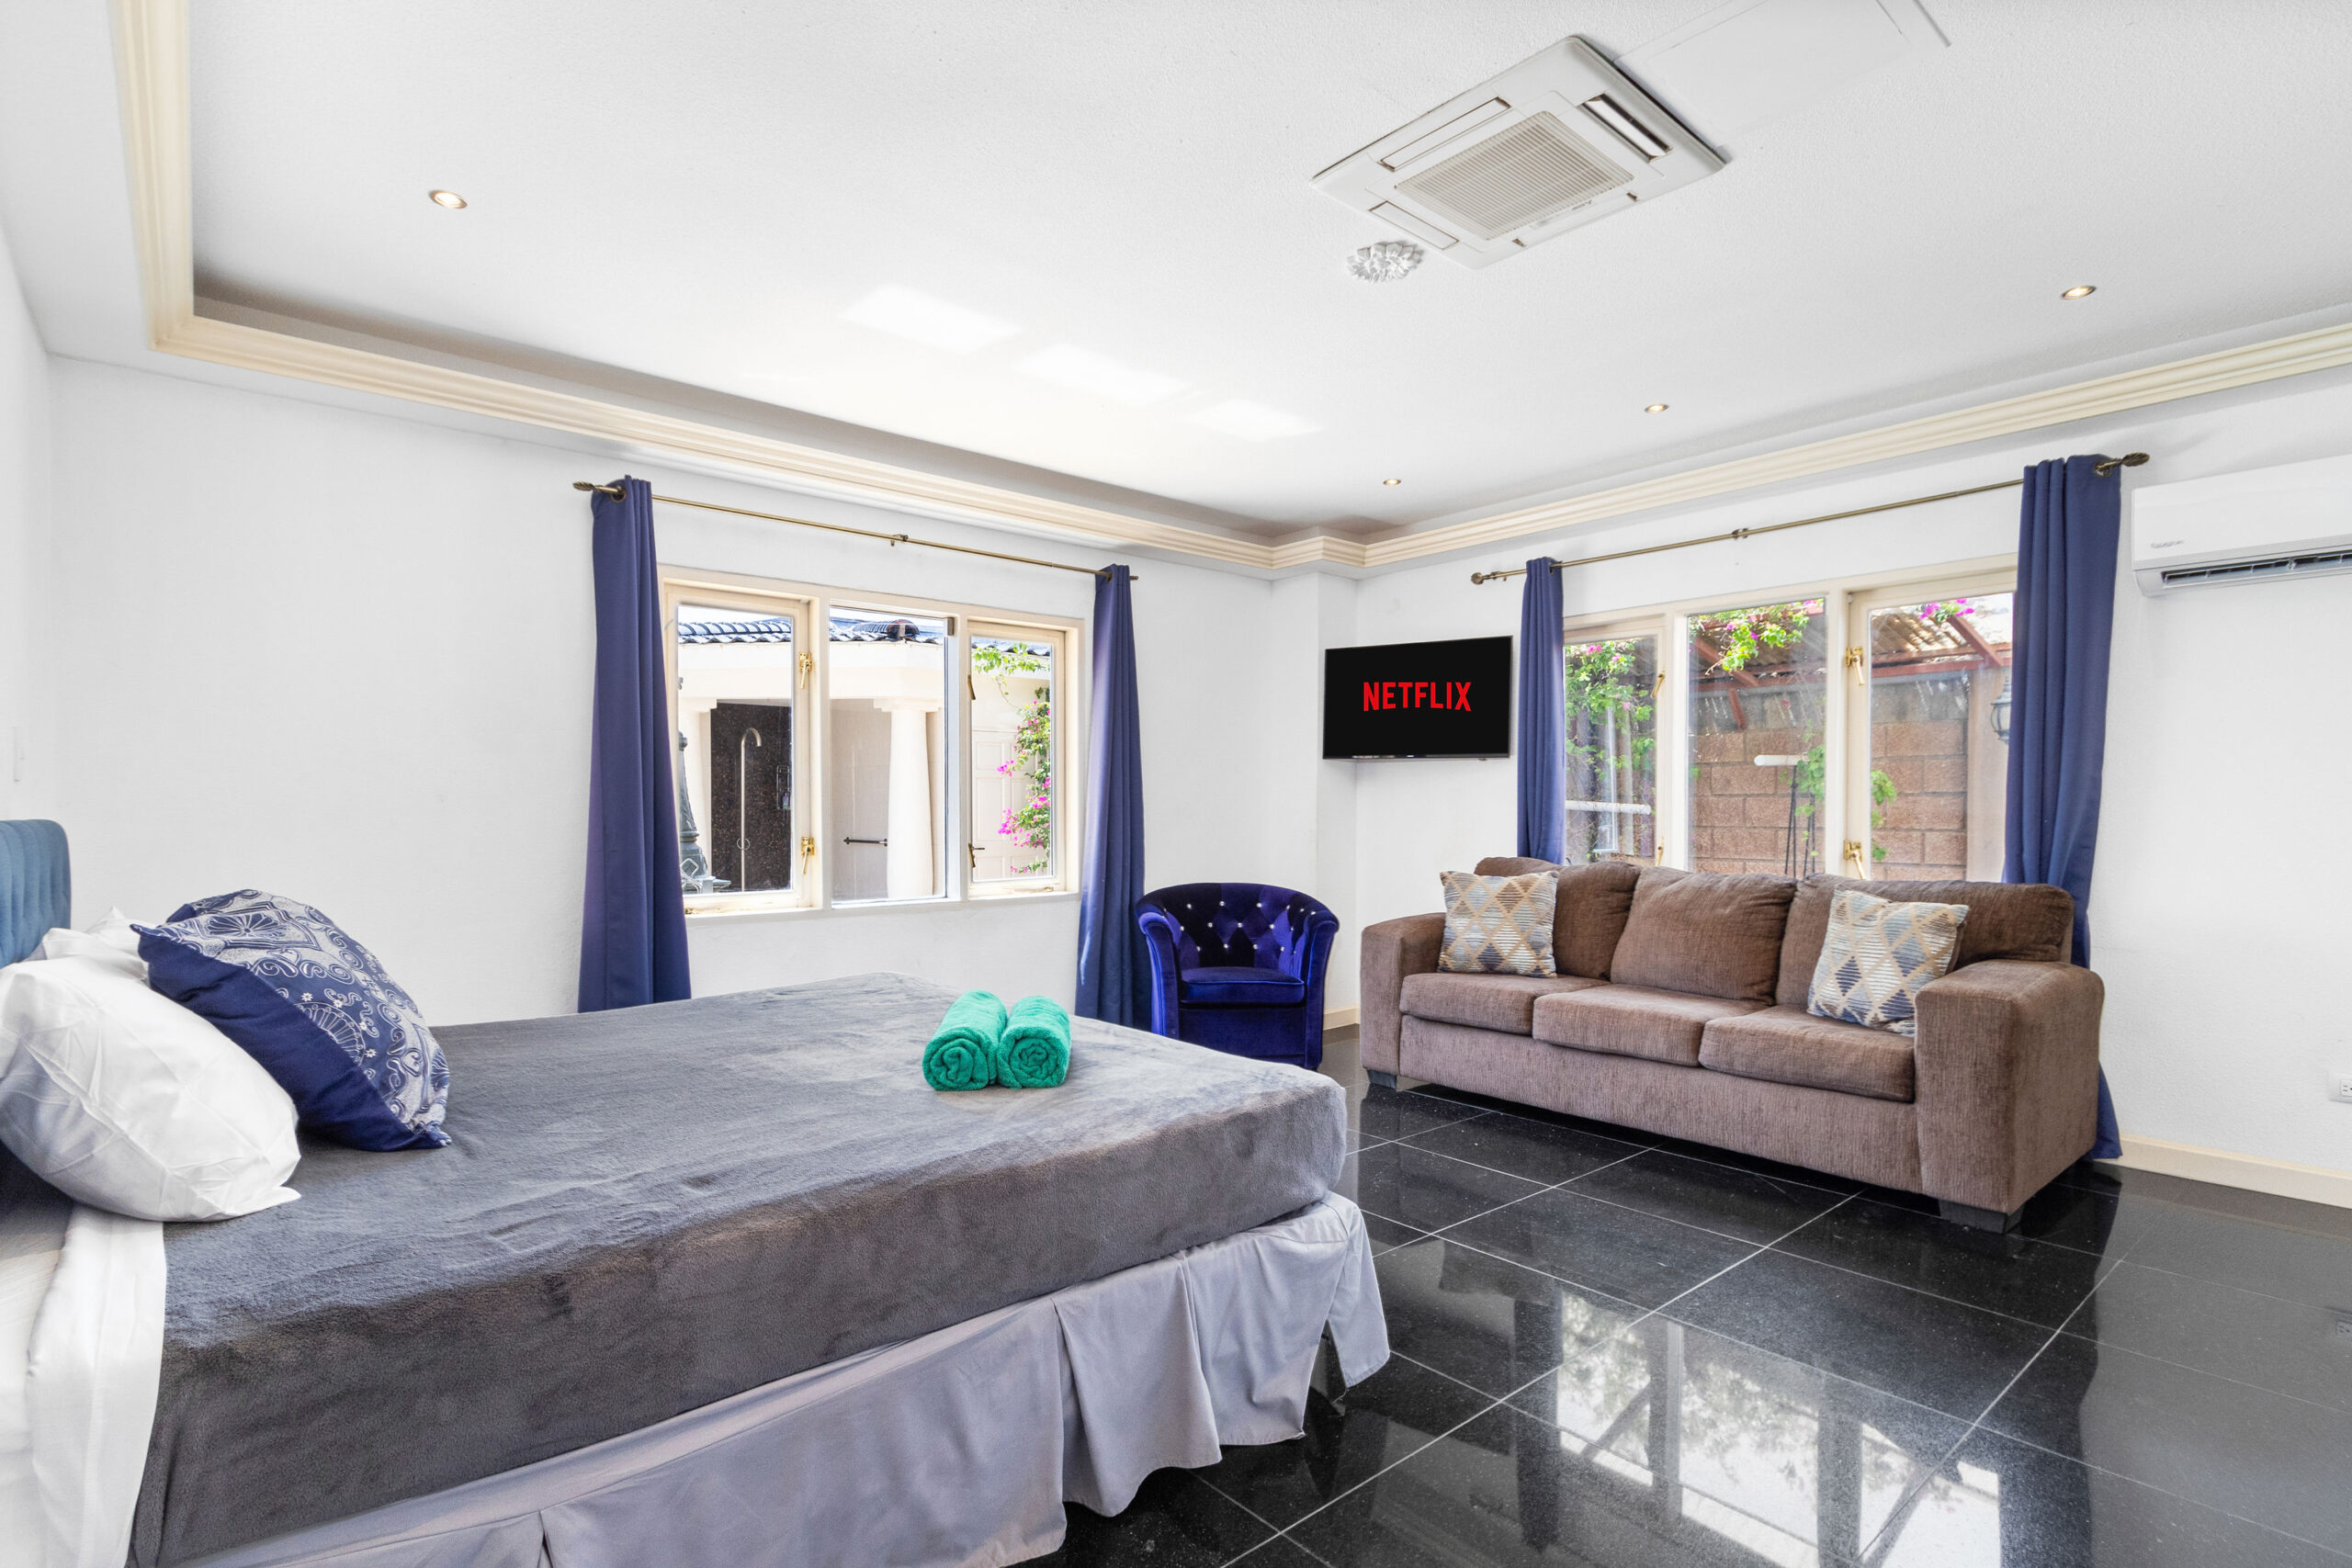 Luxurious bedroom at La Casa Piu Bella, Aruba's premier estate.